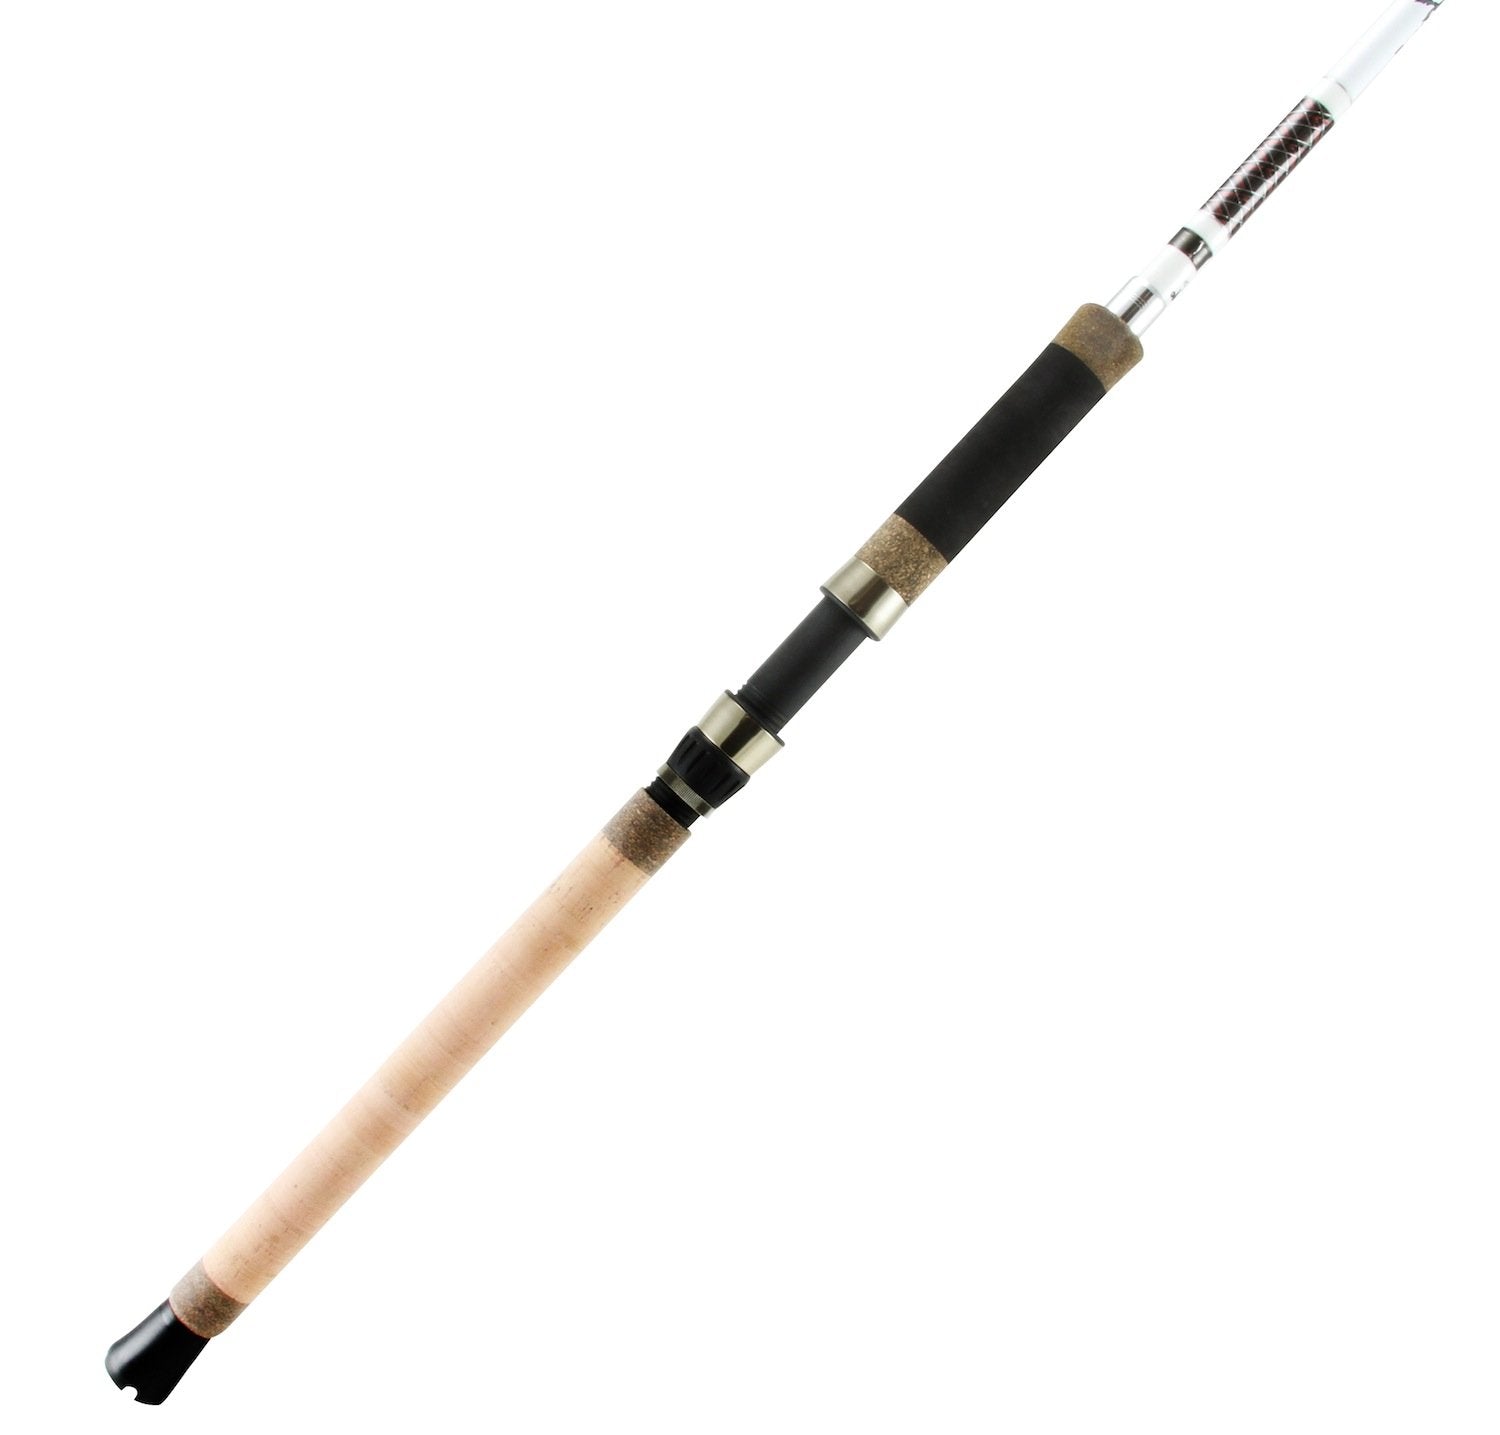 PENN Catfishing Legion Cat Rod-Reel Combo BRONZE Belly Pump 1.65m/250g